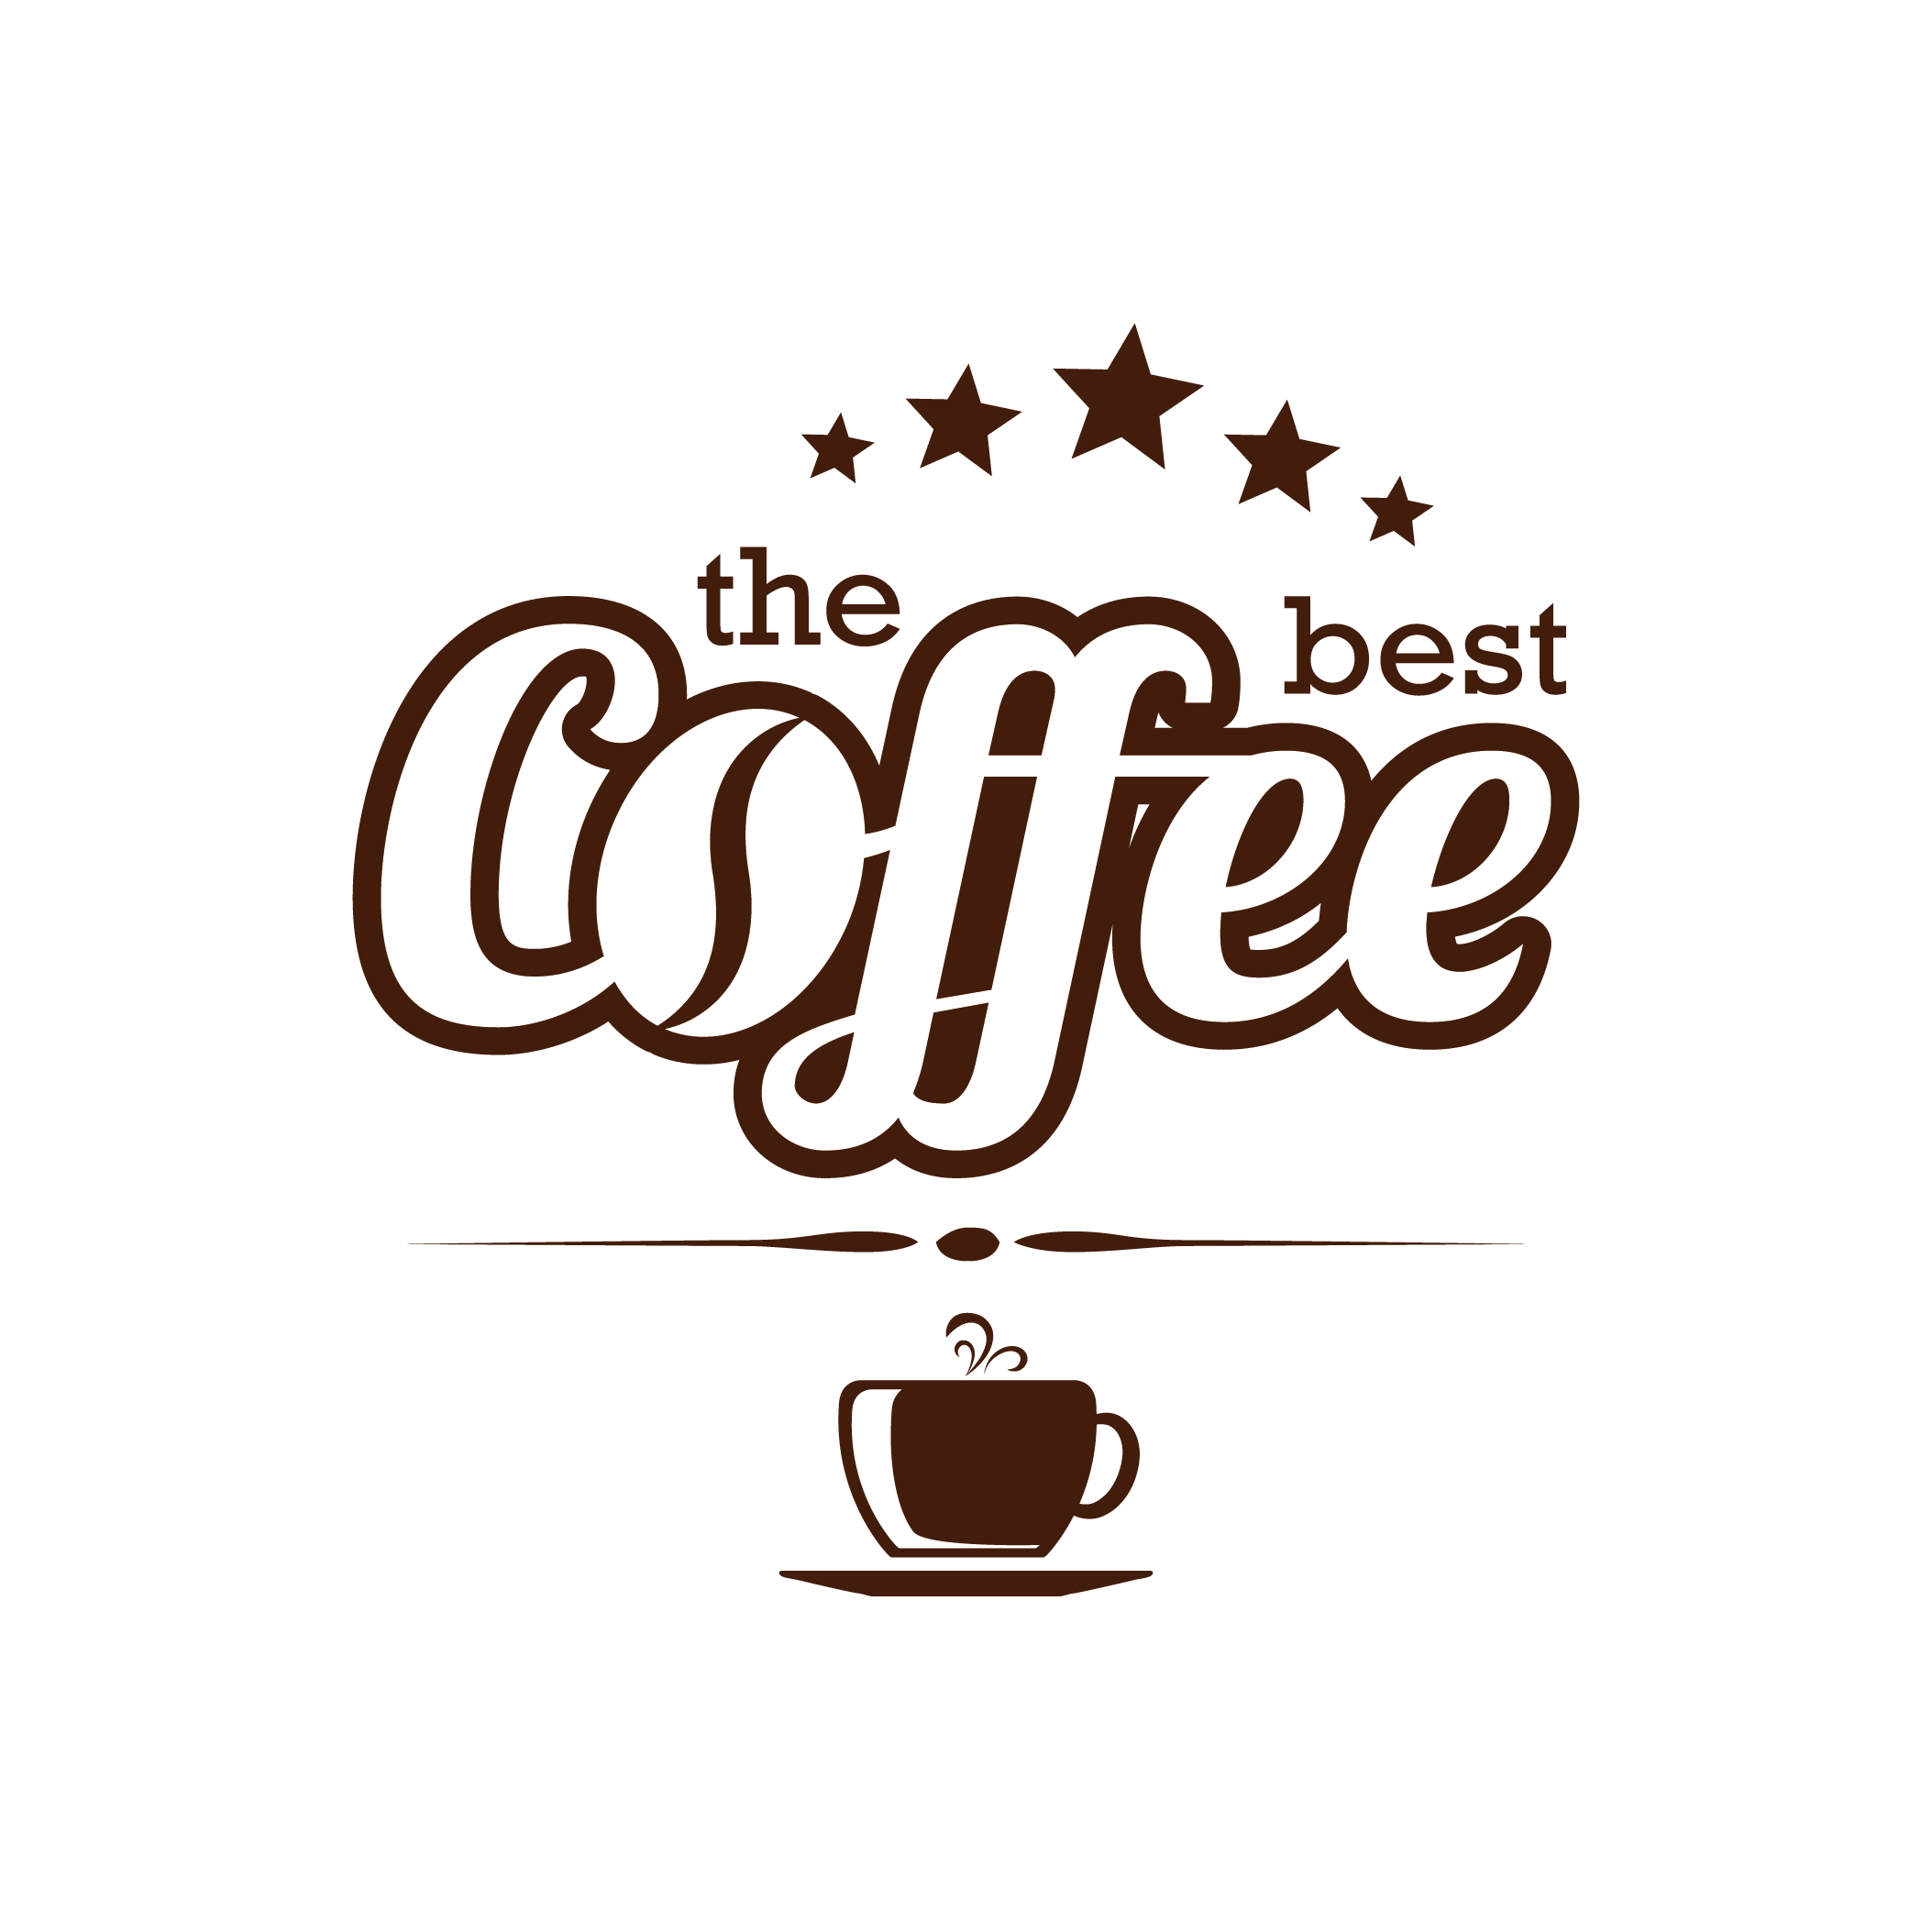 logo kedai kopi